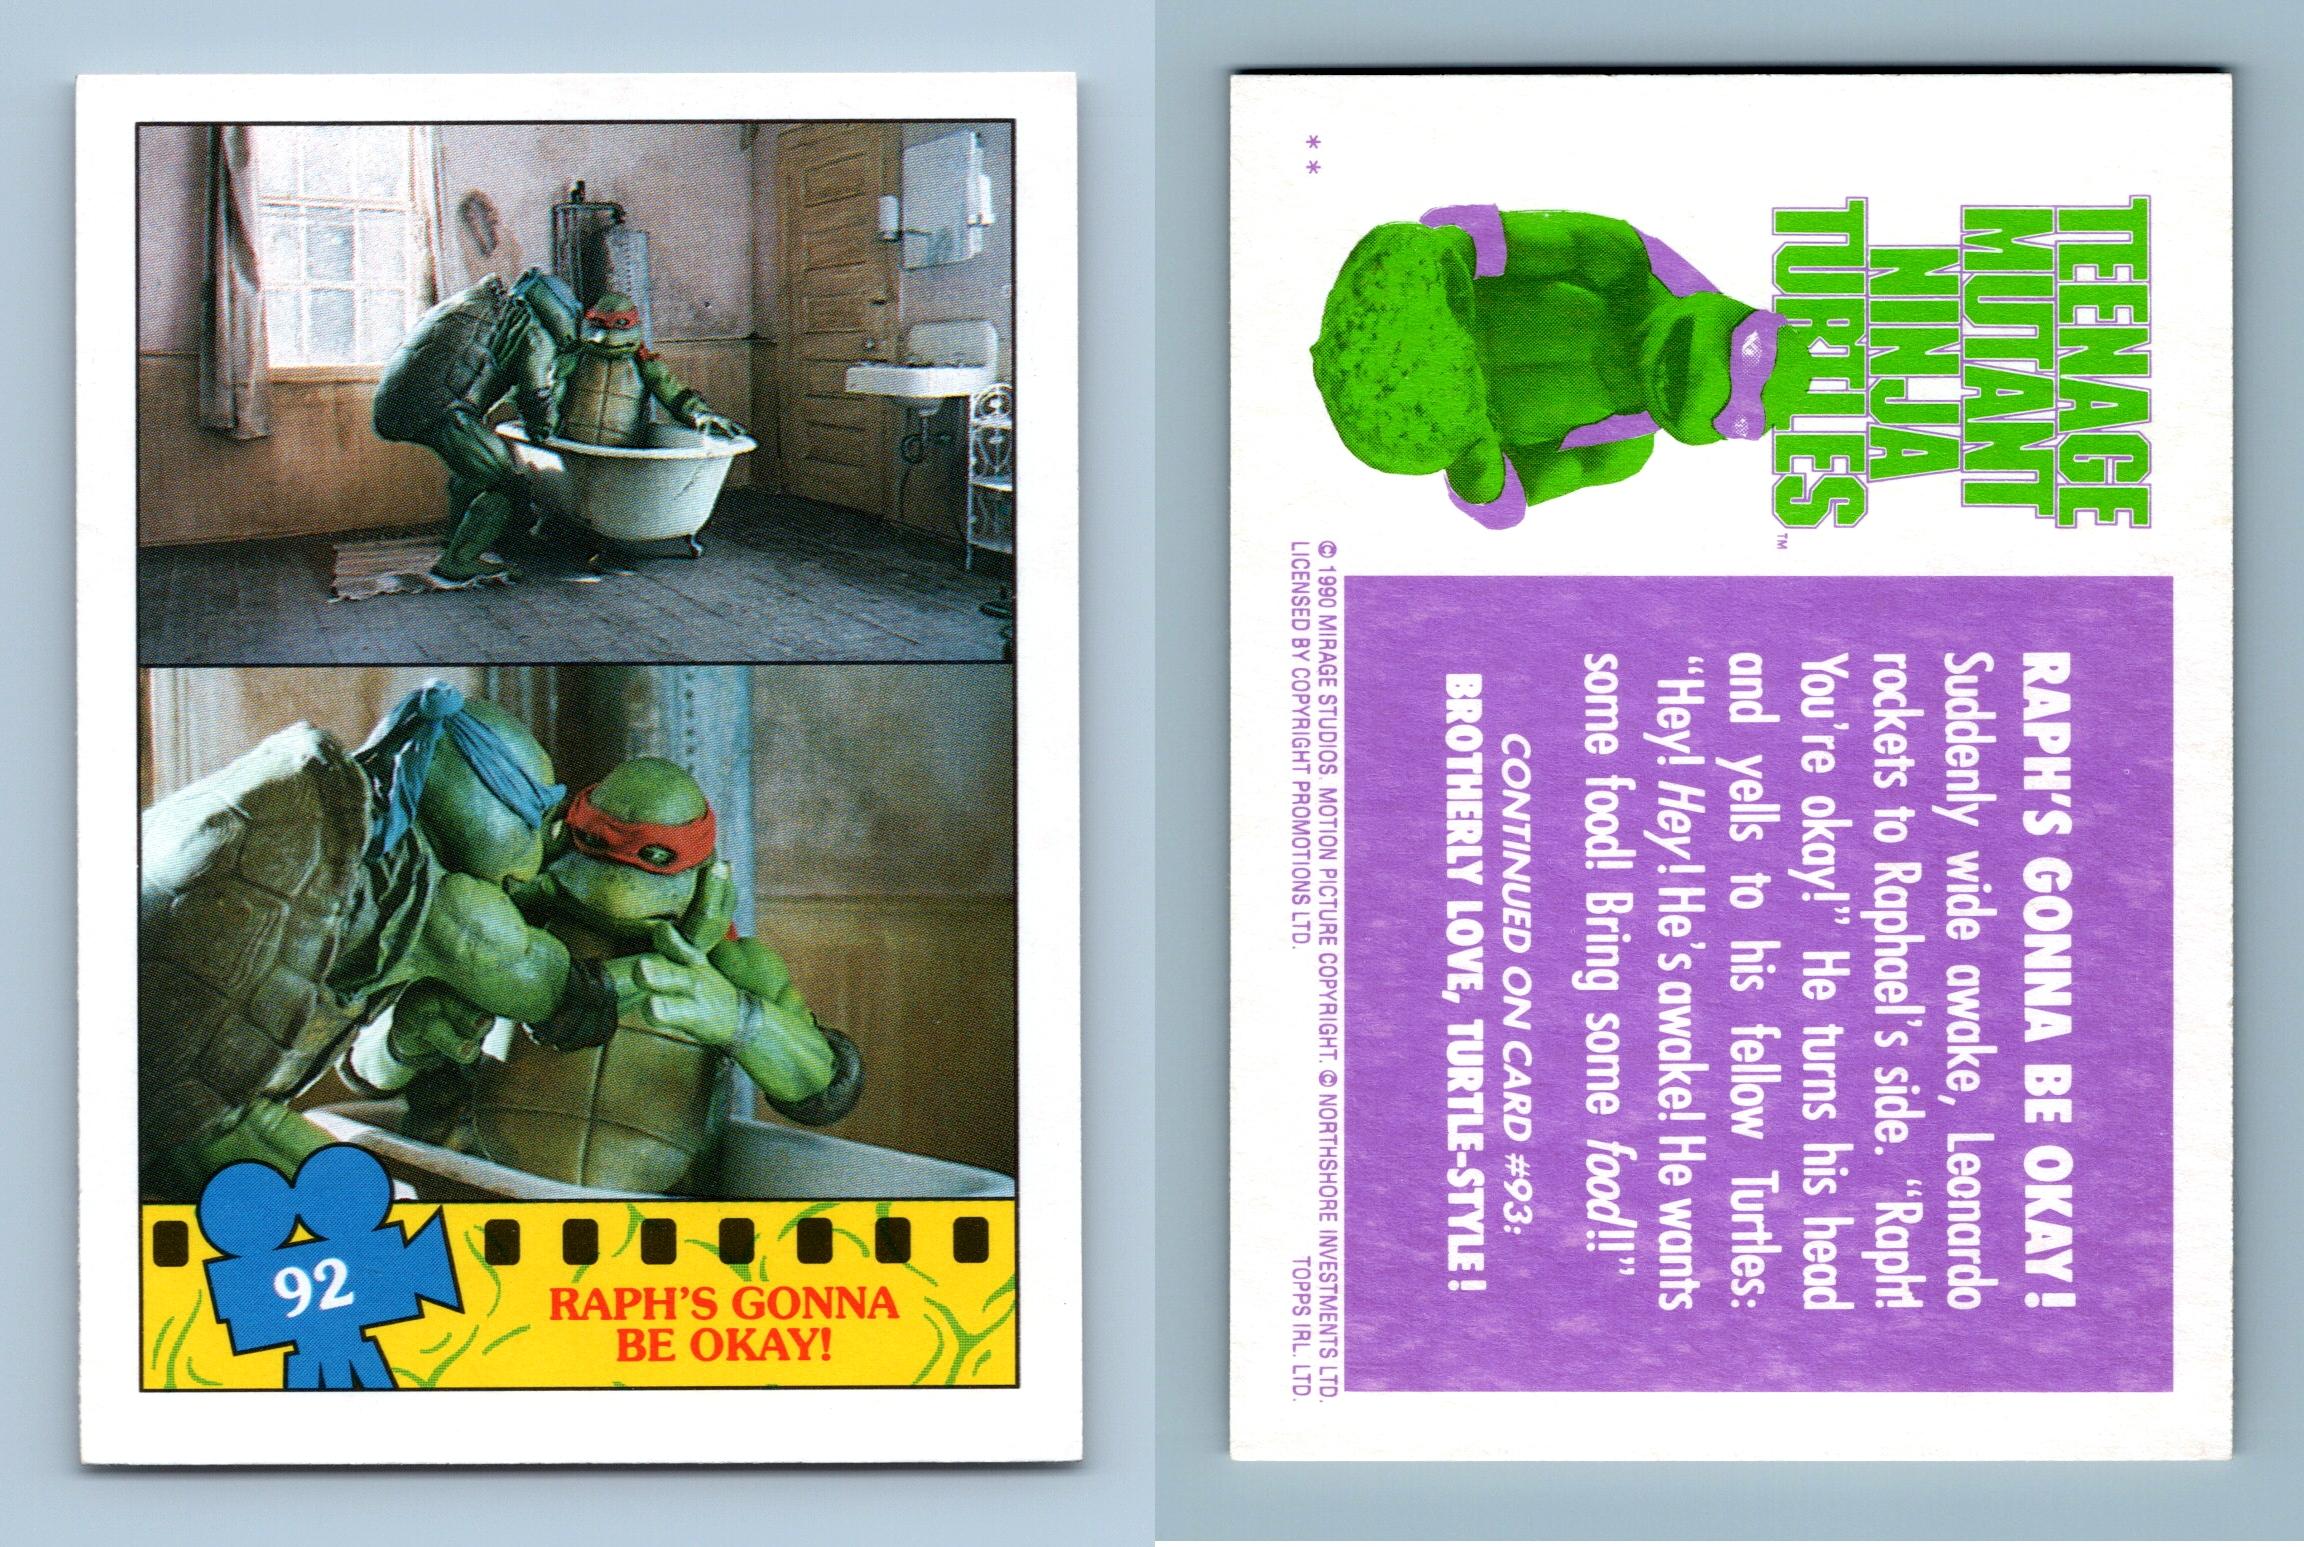 Raph OK #92 Teenage Mutant Ninja Turtles : The Movie 1990 Topps Trading Card - Afbeelding 1 van 1